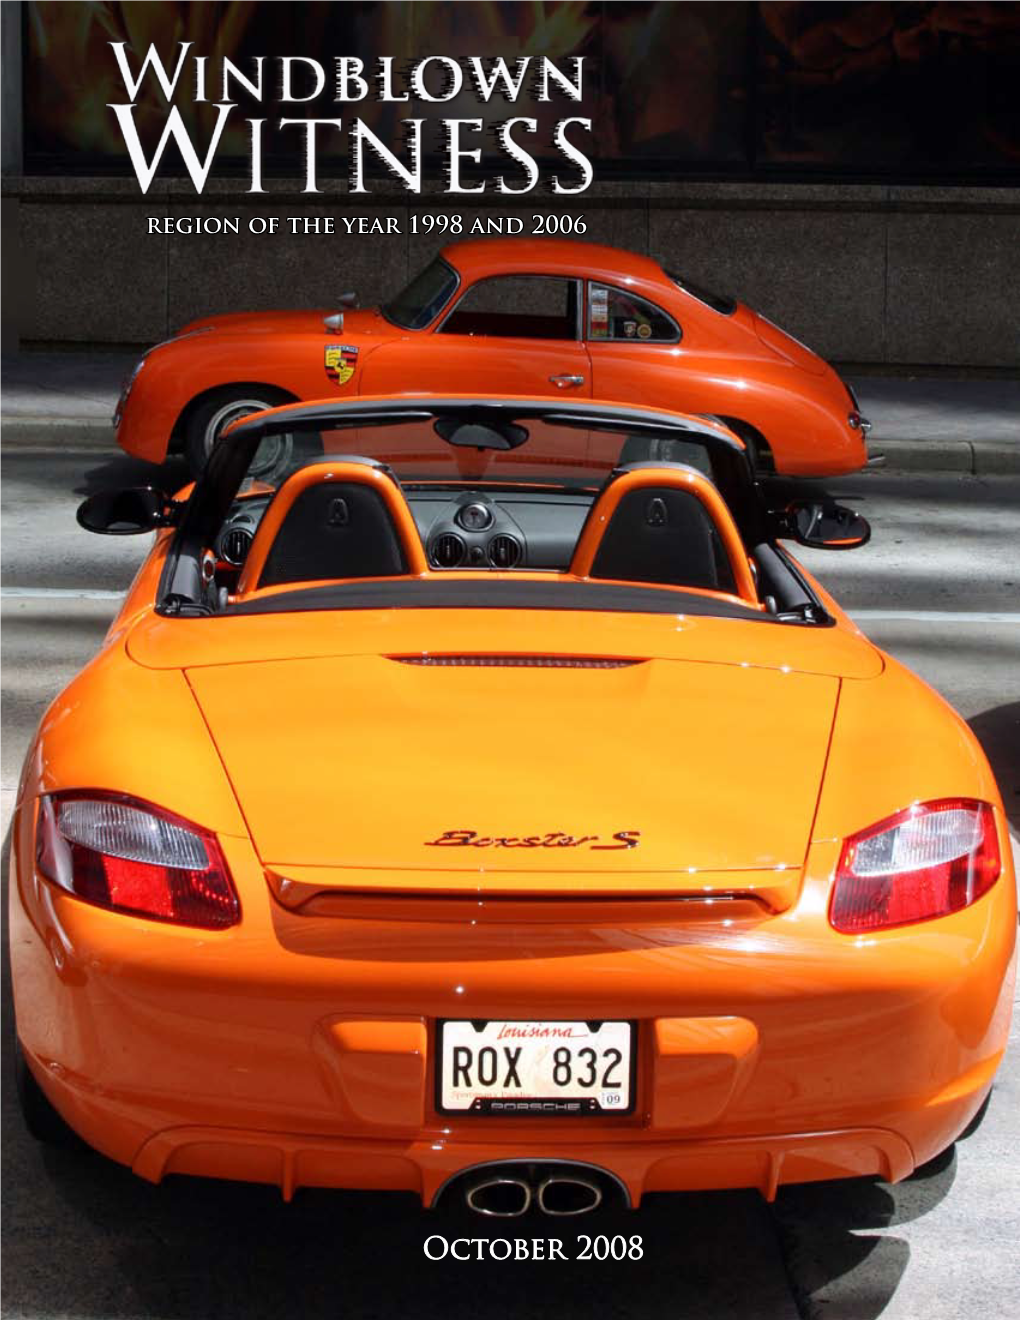 October 2008 ©2008 Porsche Cars North America, Inc